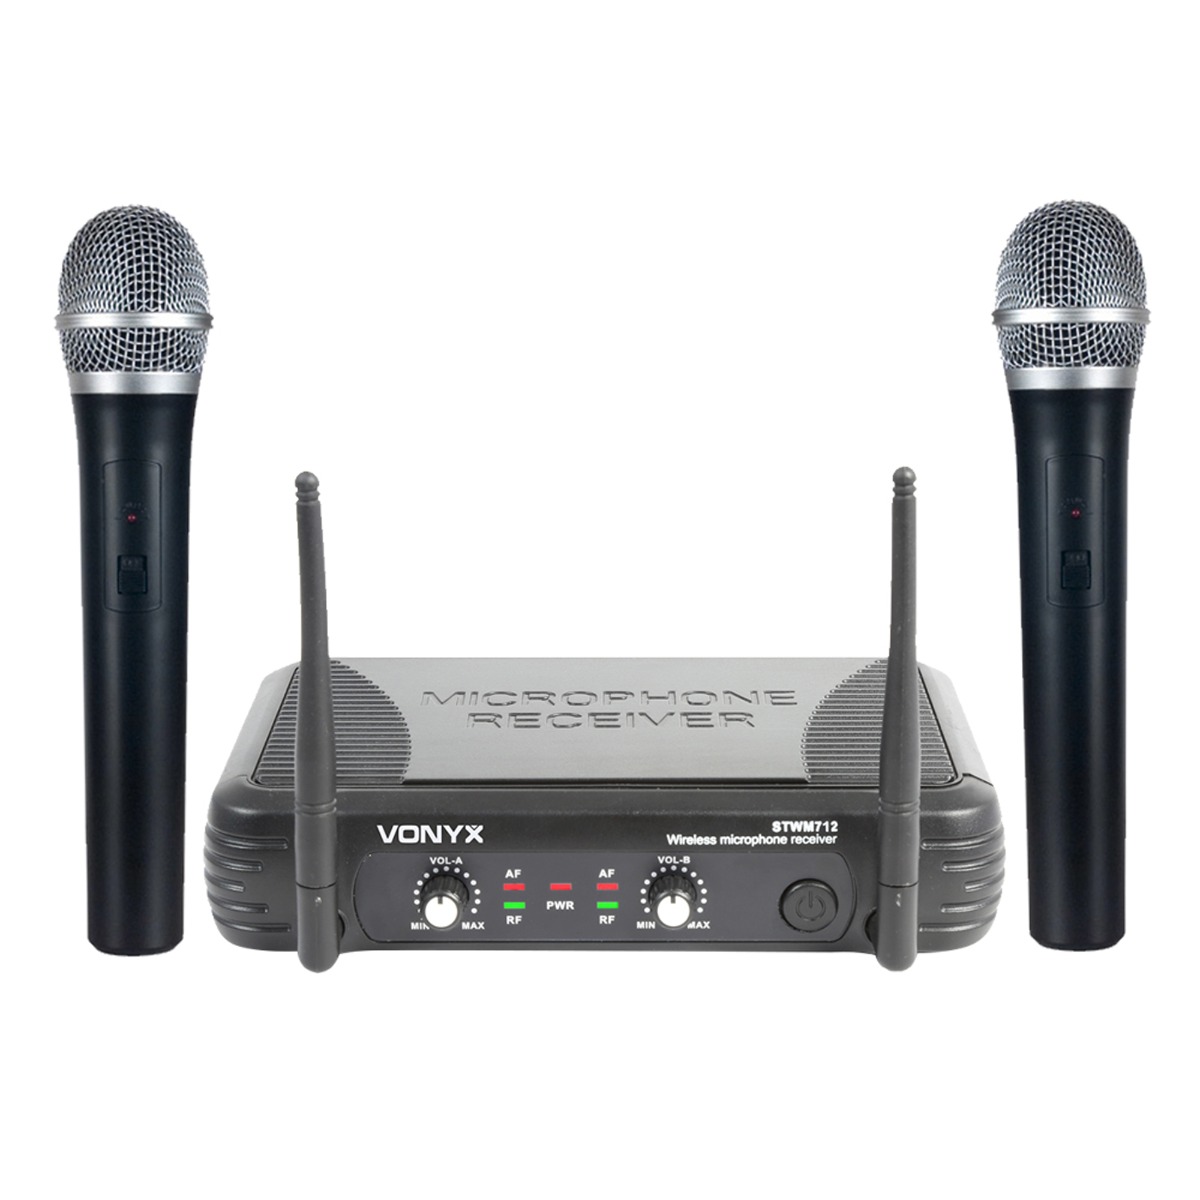 Vonyx STWM712 VHF Wireless Microphone System